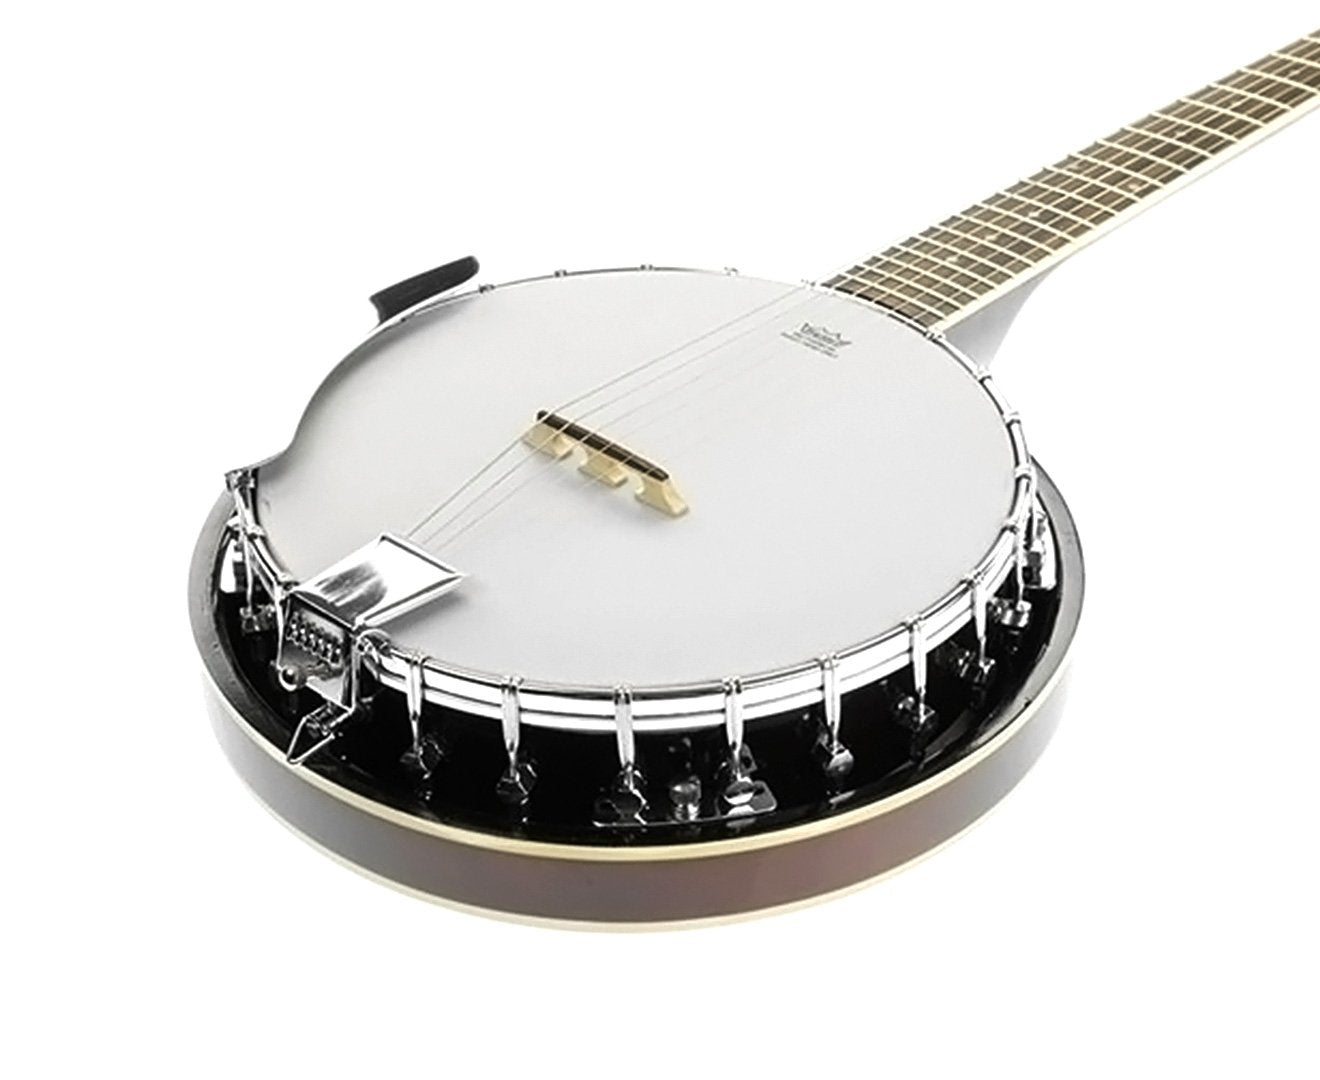 Karrera 6 String Resonator Banjo -  Brown - SILBERSHELL